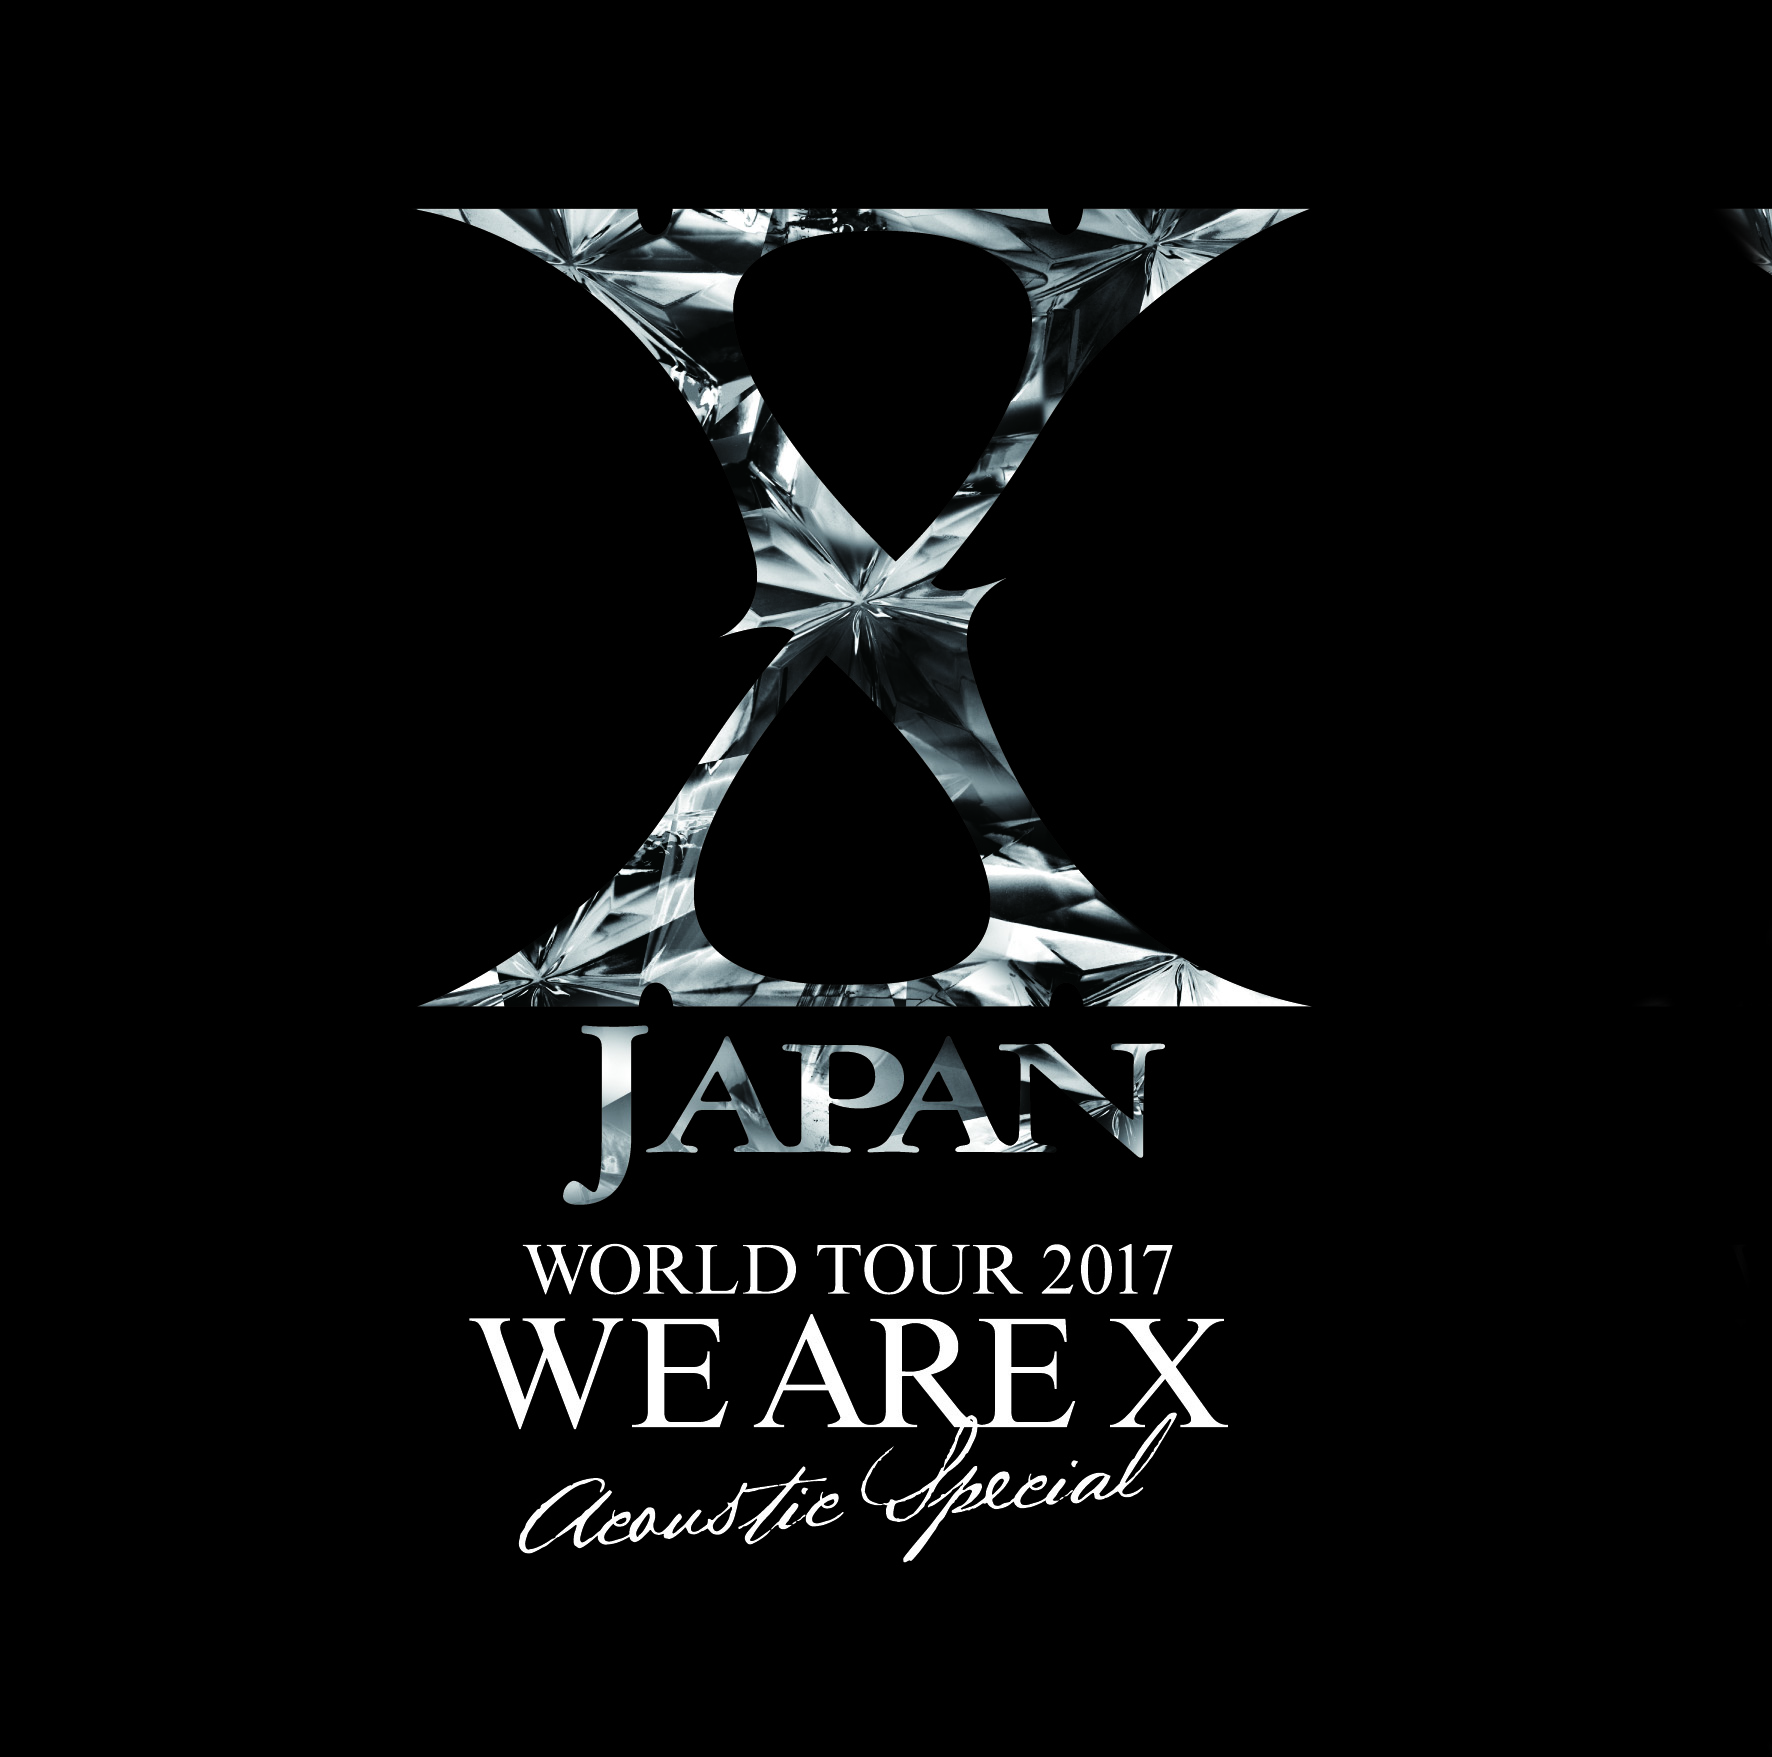 X Japan ツアー公式グッズが本日 7 4 よりec先行販売スタート Yoshiki Mobile Jp